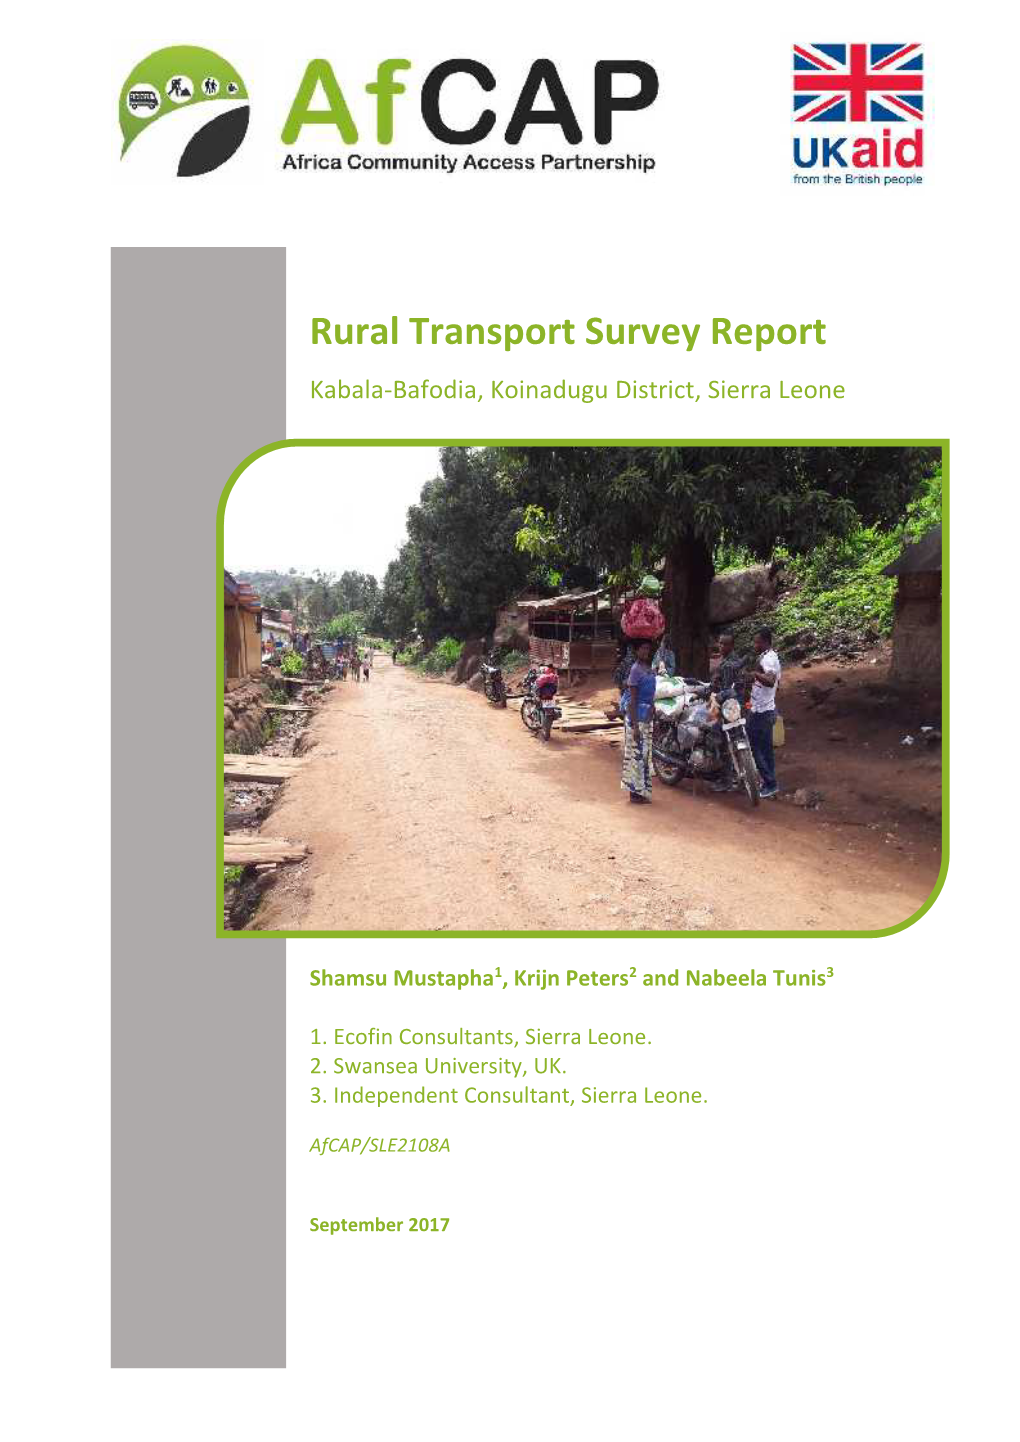 Rural Transport Survey Report, Kabala-Bafodia, Koinadugu District